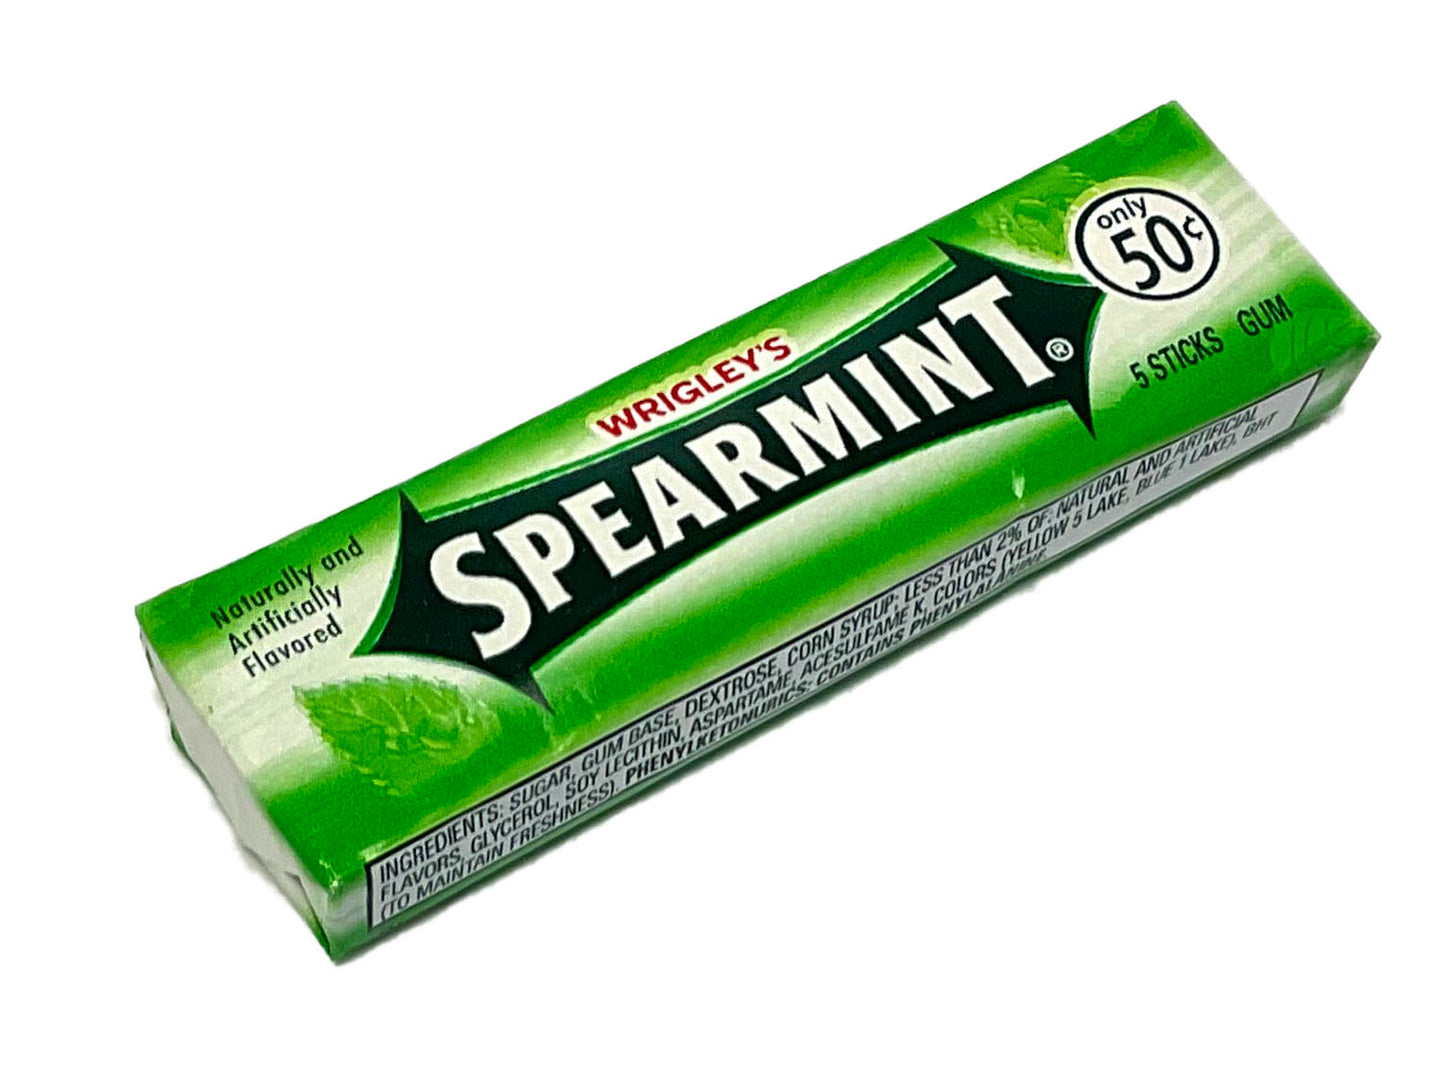 Spearmint Gum - 5-stick pack